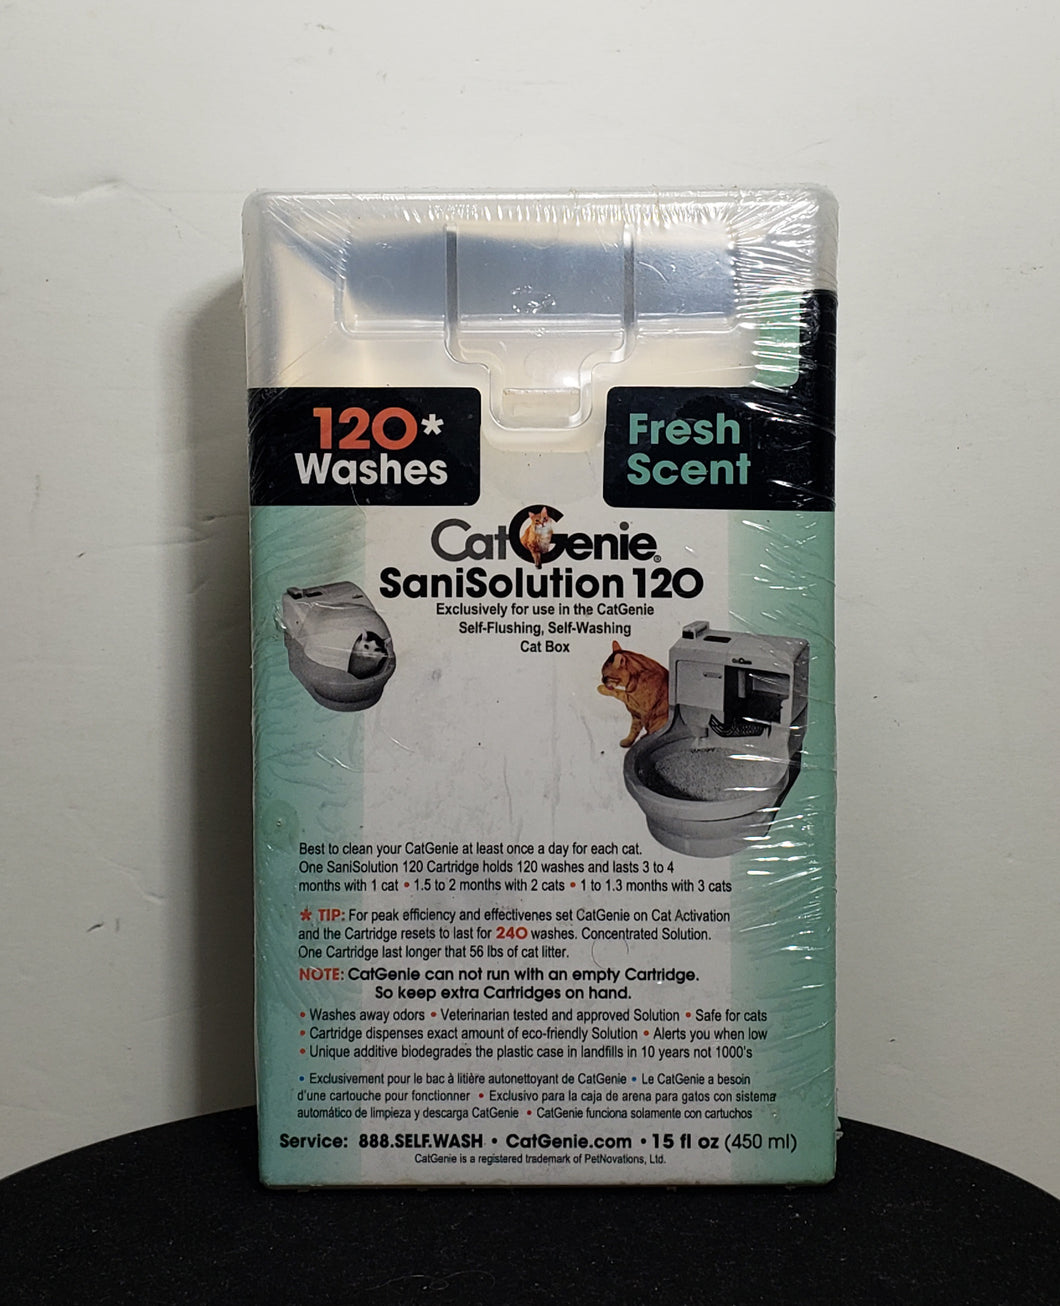 CatGenie SaniSolution 120 Self-Cleaning Litter Box Fresh Scent